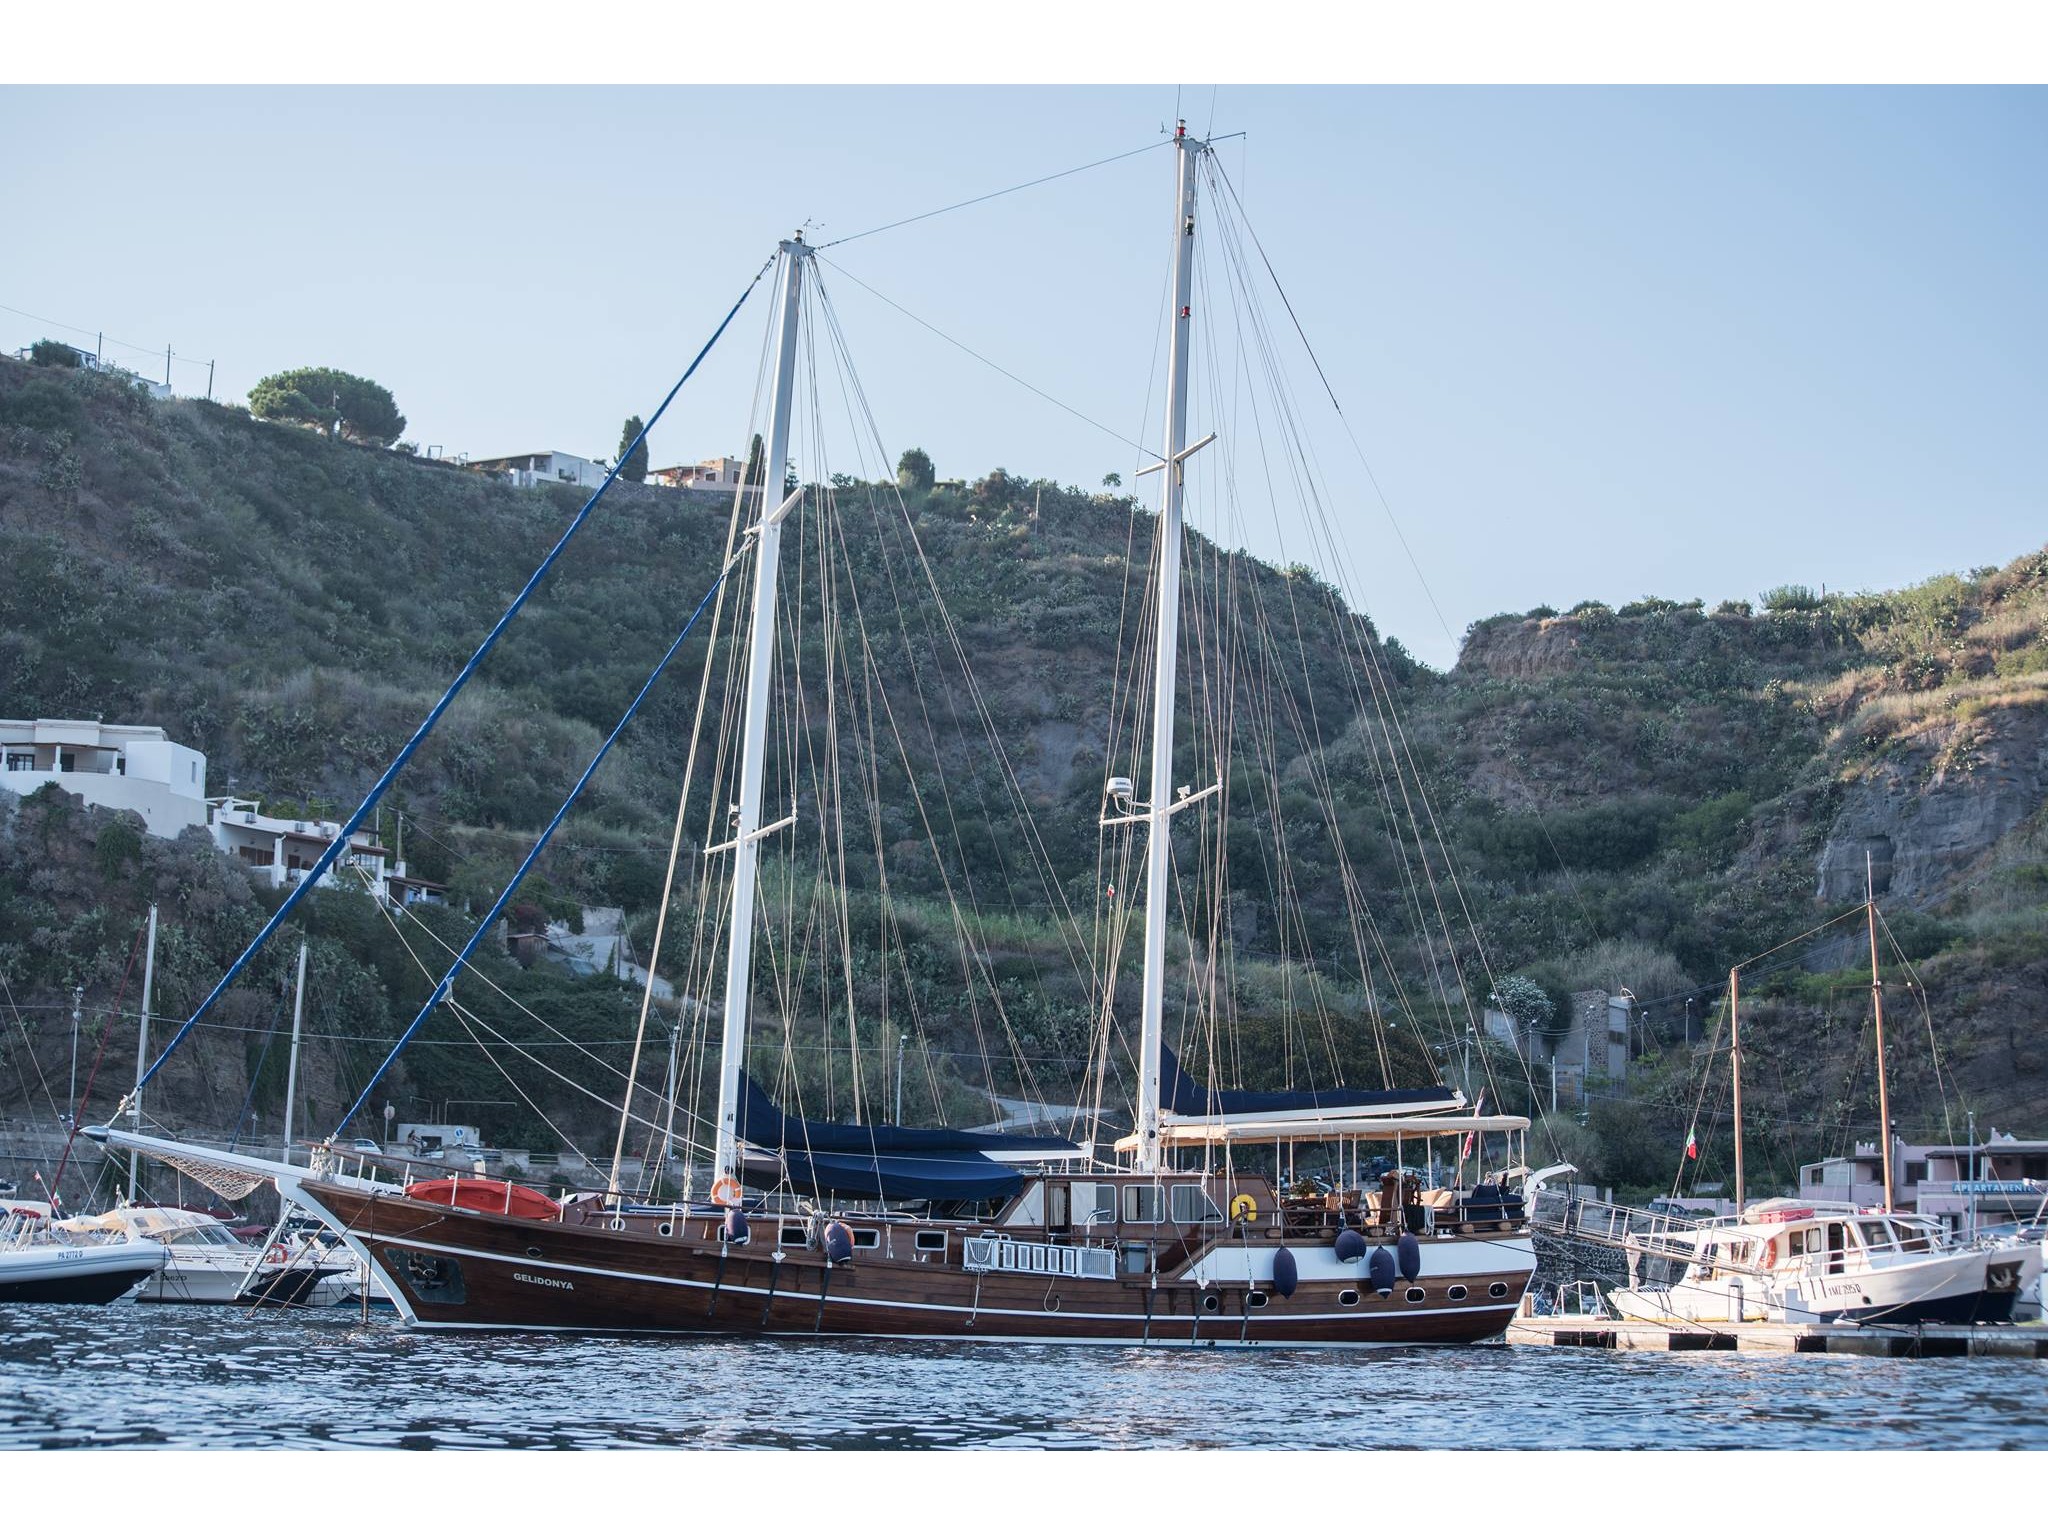 Gulet - Superyacht charter Sicily & Boat hire in Italy Sicily Aeolian Islands Lipari Lipari 2